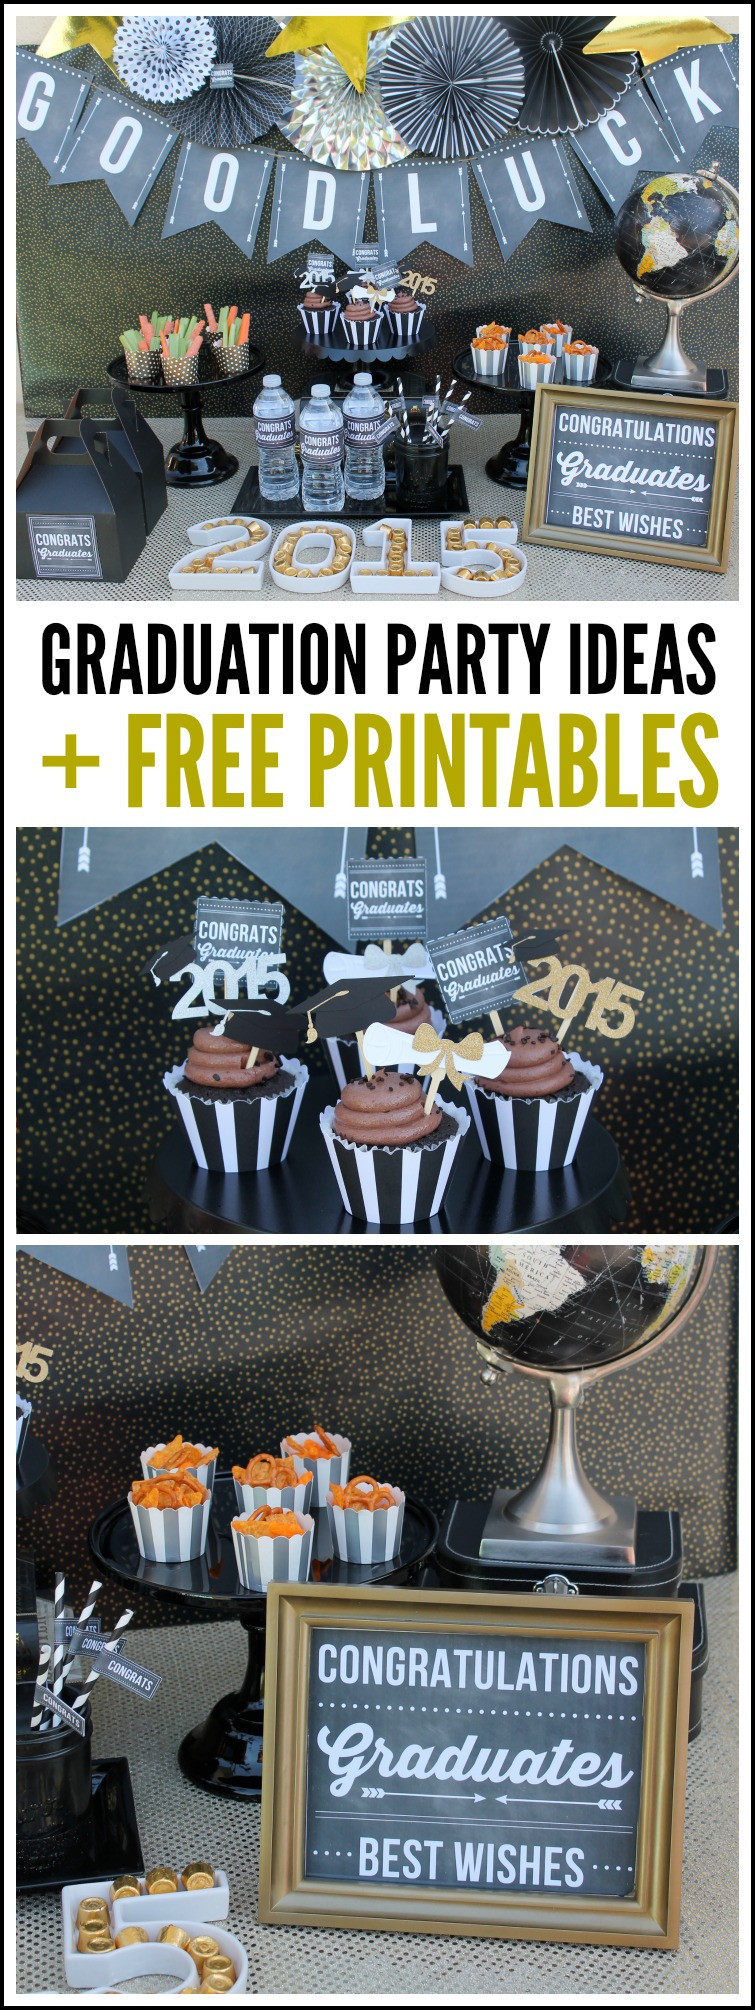 Graduation Favor Ideas For A Beach Party
 Graduation Party Ideas Free Printables